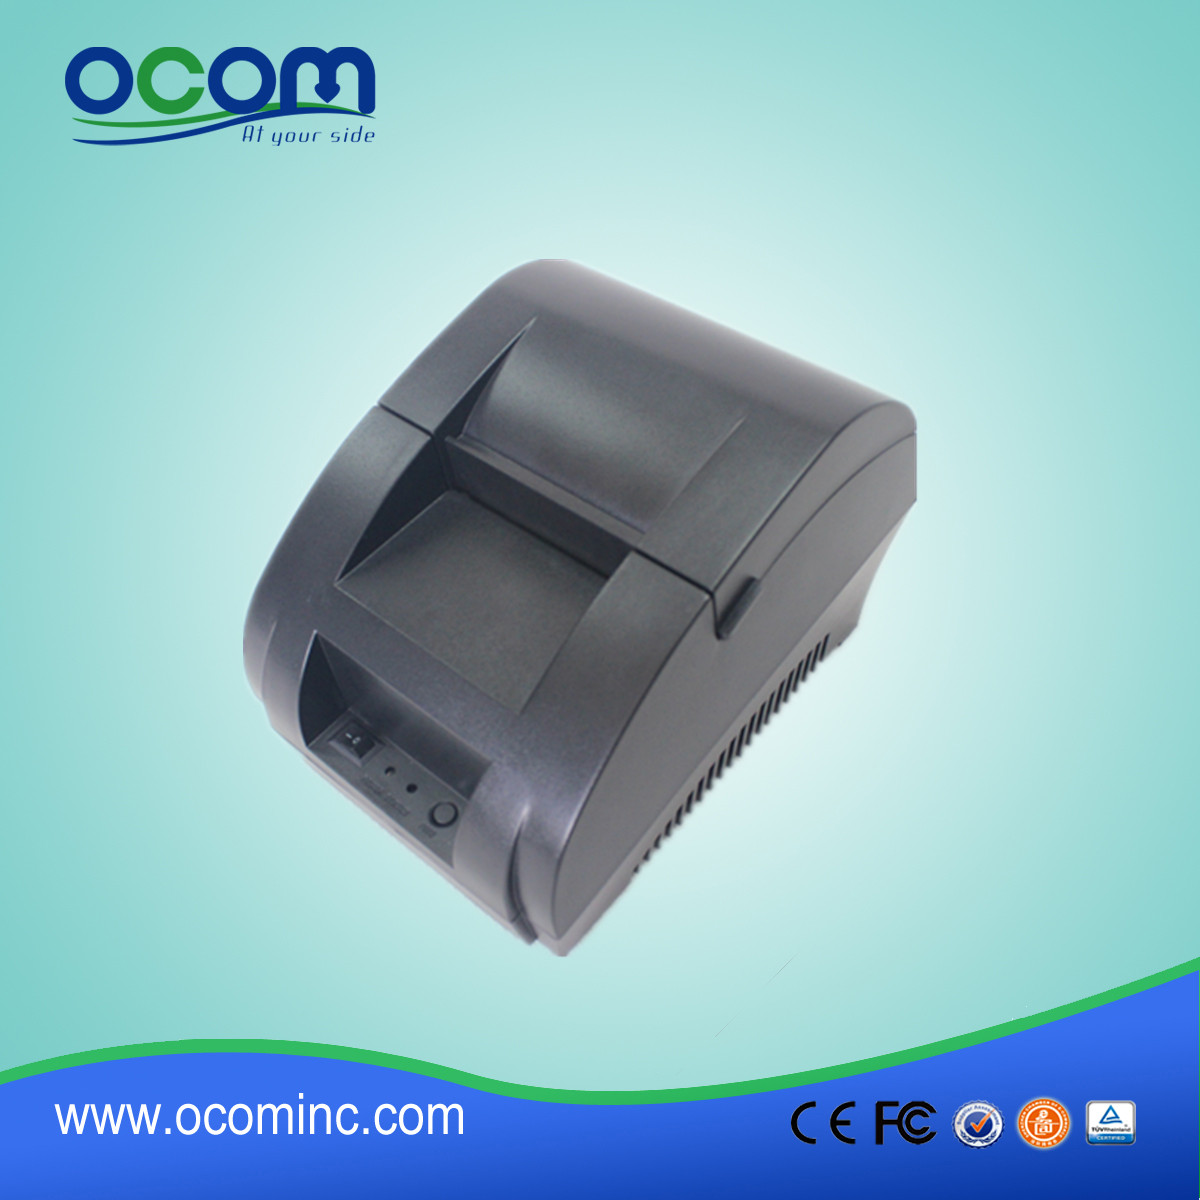 58mm thermal receipt printer with built-in power adaptor OCPP-58Z-U1 1D/2D code printing